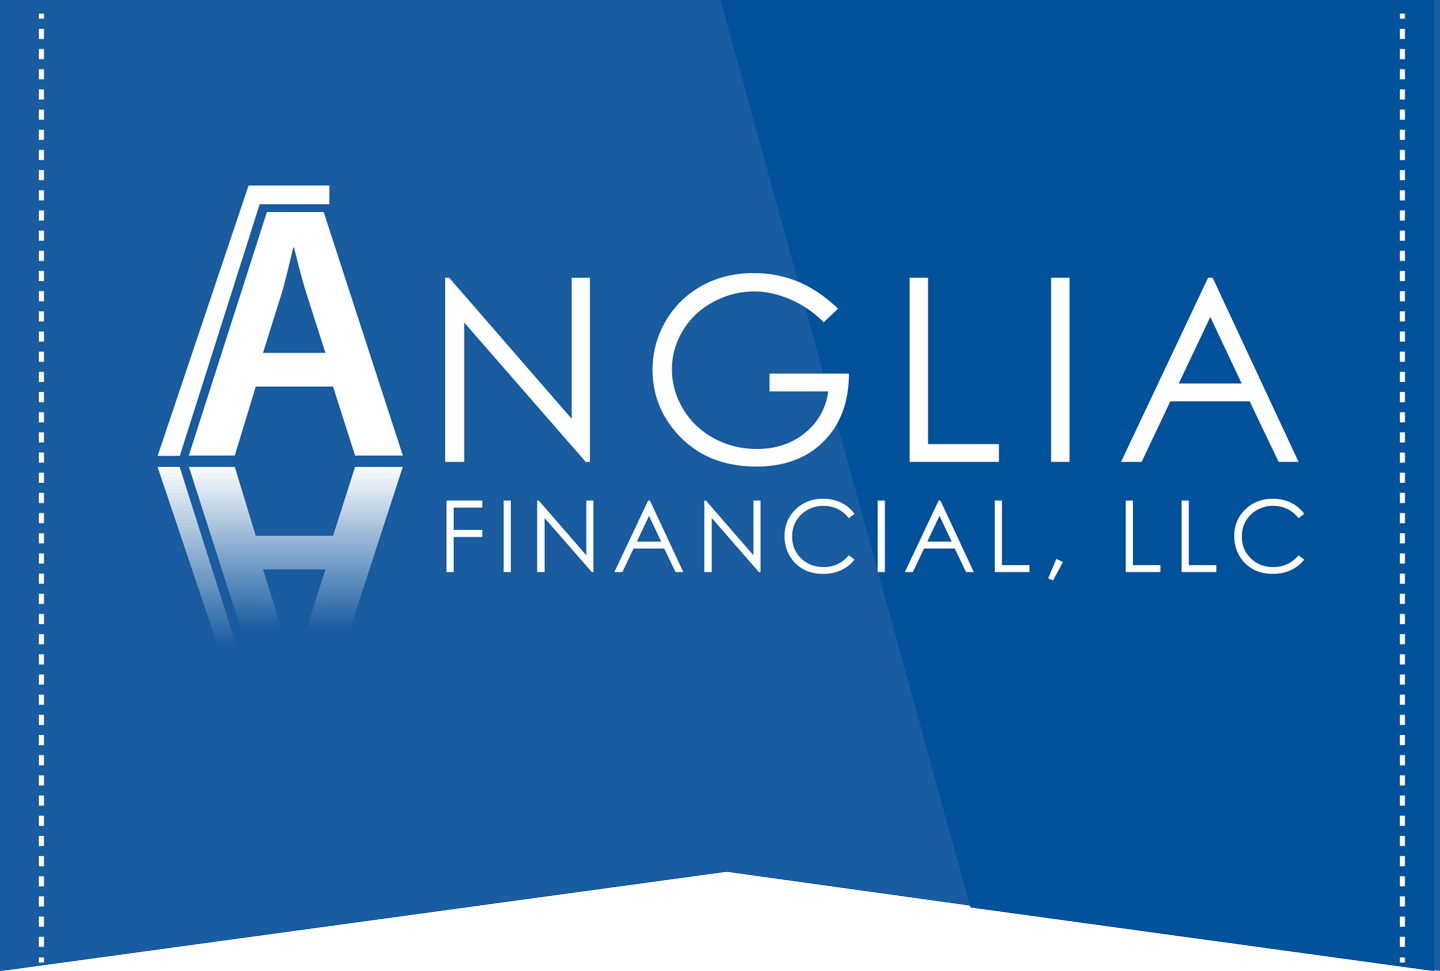 Anglia Financial, LLC